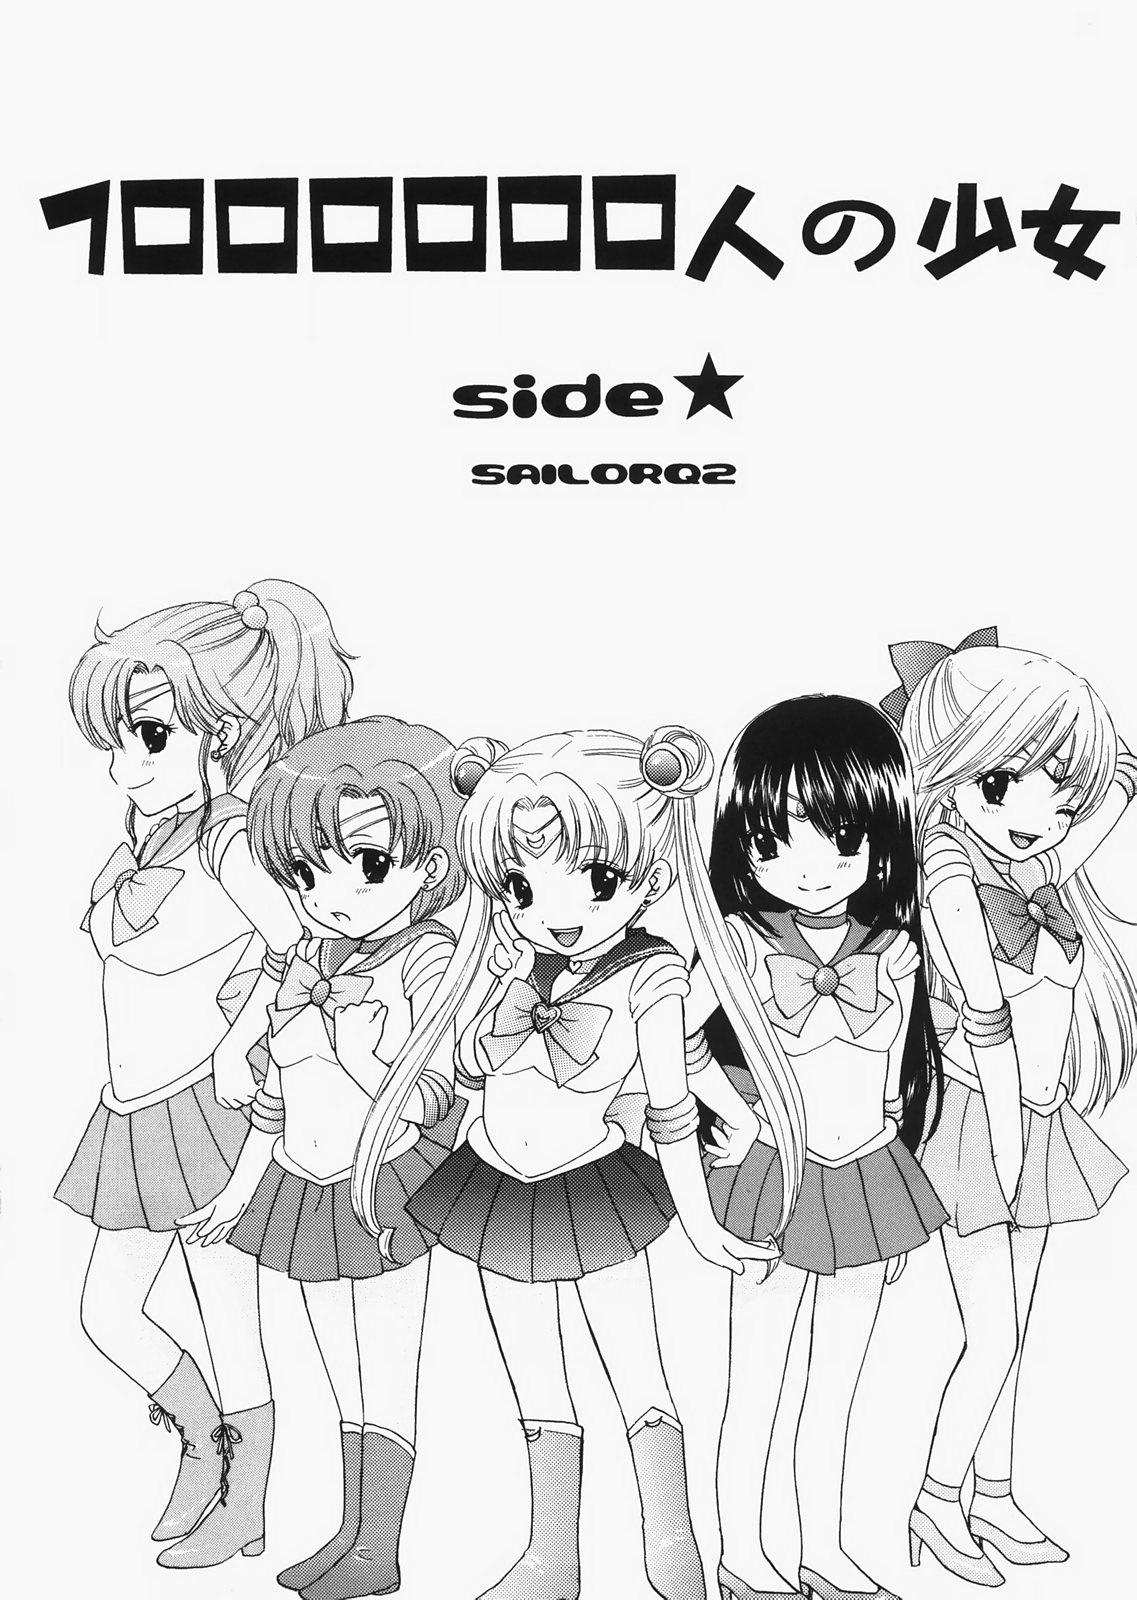 Amateur 1000000-nin no Shoujo side star - Sailor moon Boob - Page 4